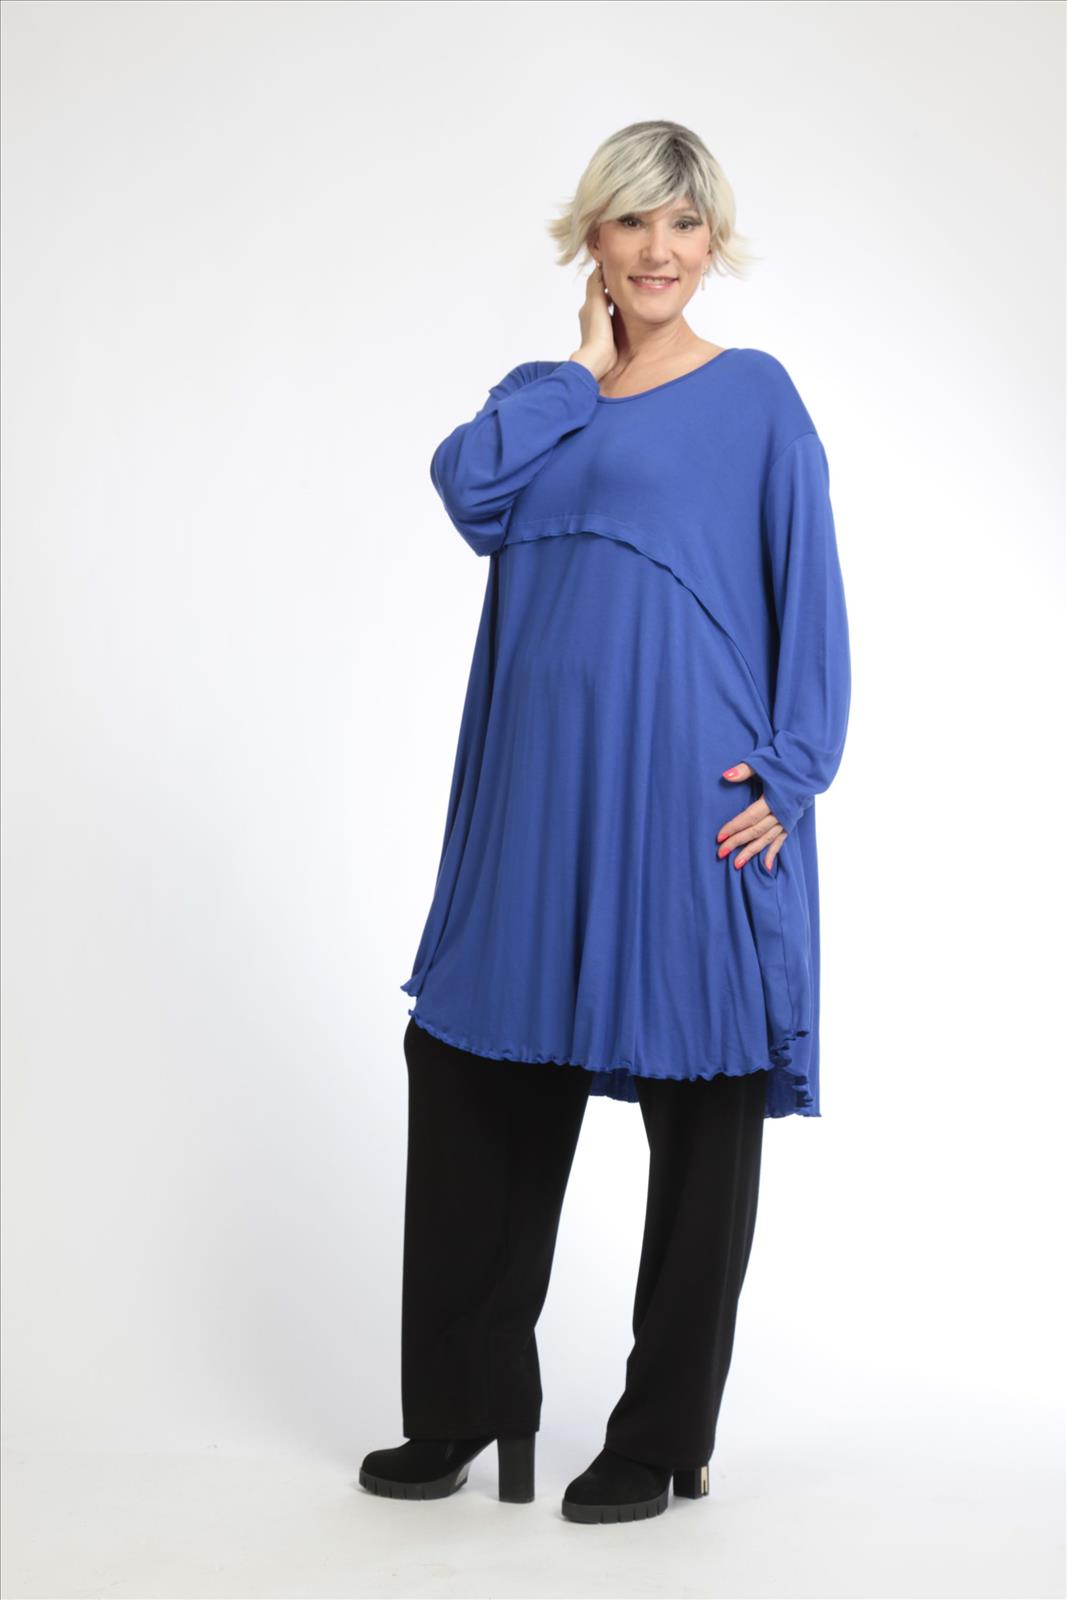 Alltags Big Shirt in A-Form aus feiner Jersey Qualität, Royalblau Lagenlook Oversize Mode B2B Großhandel